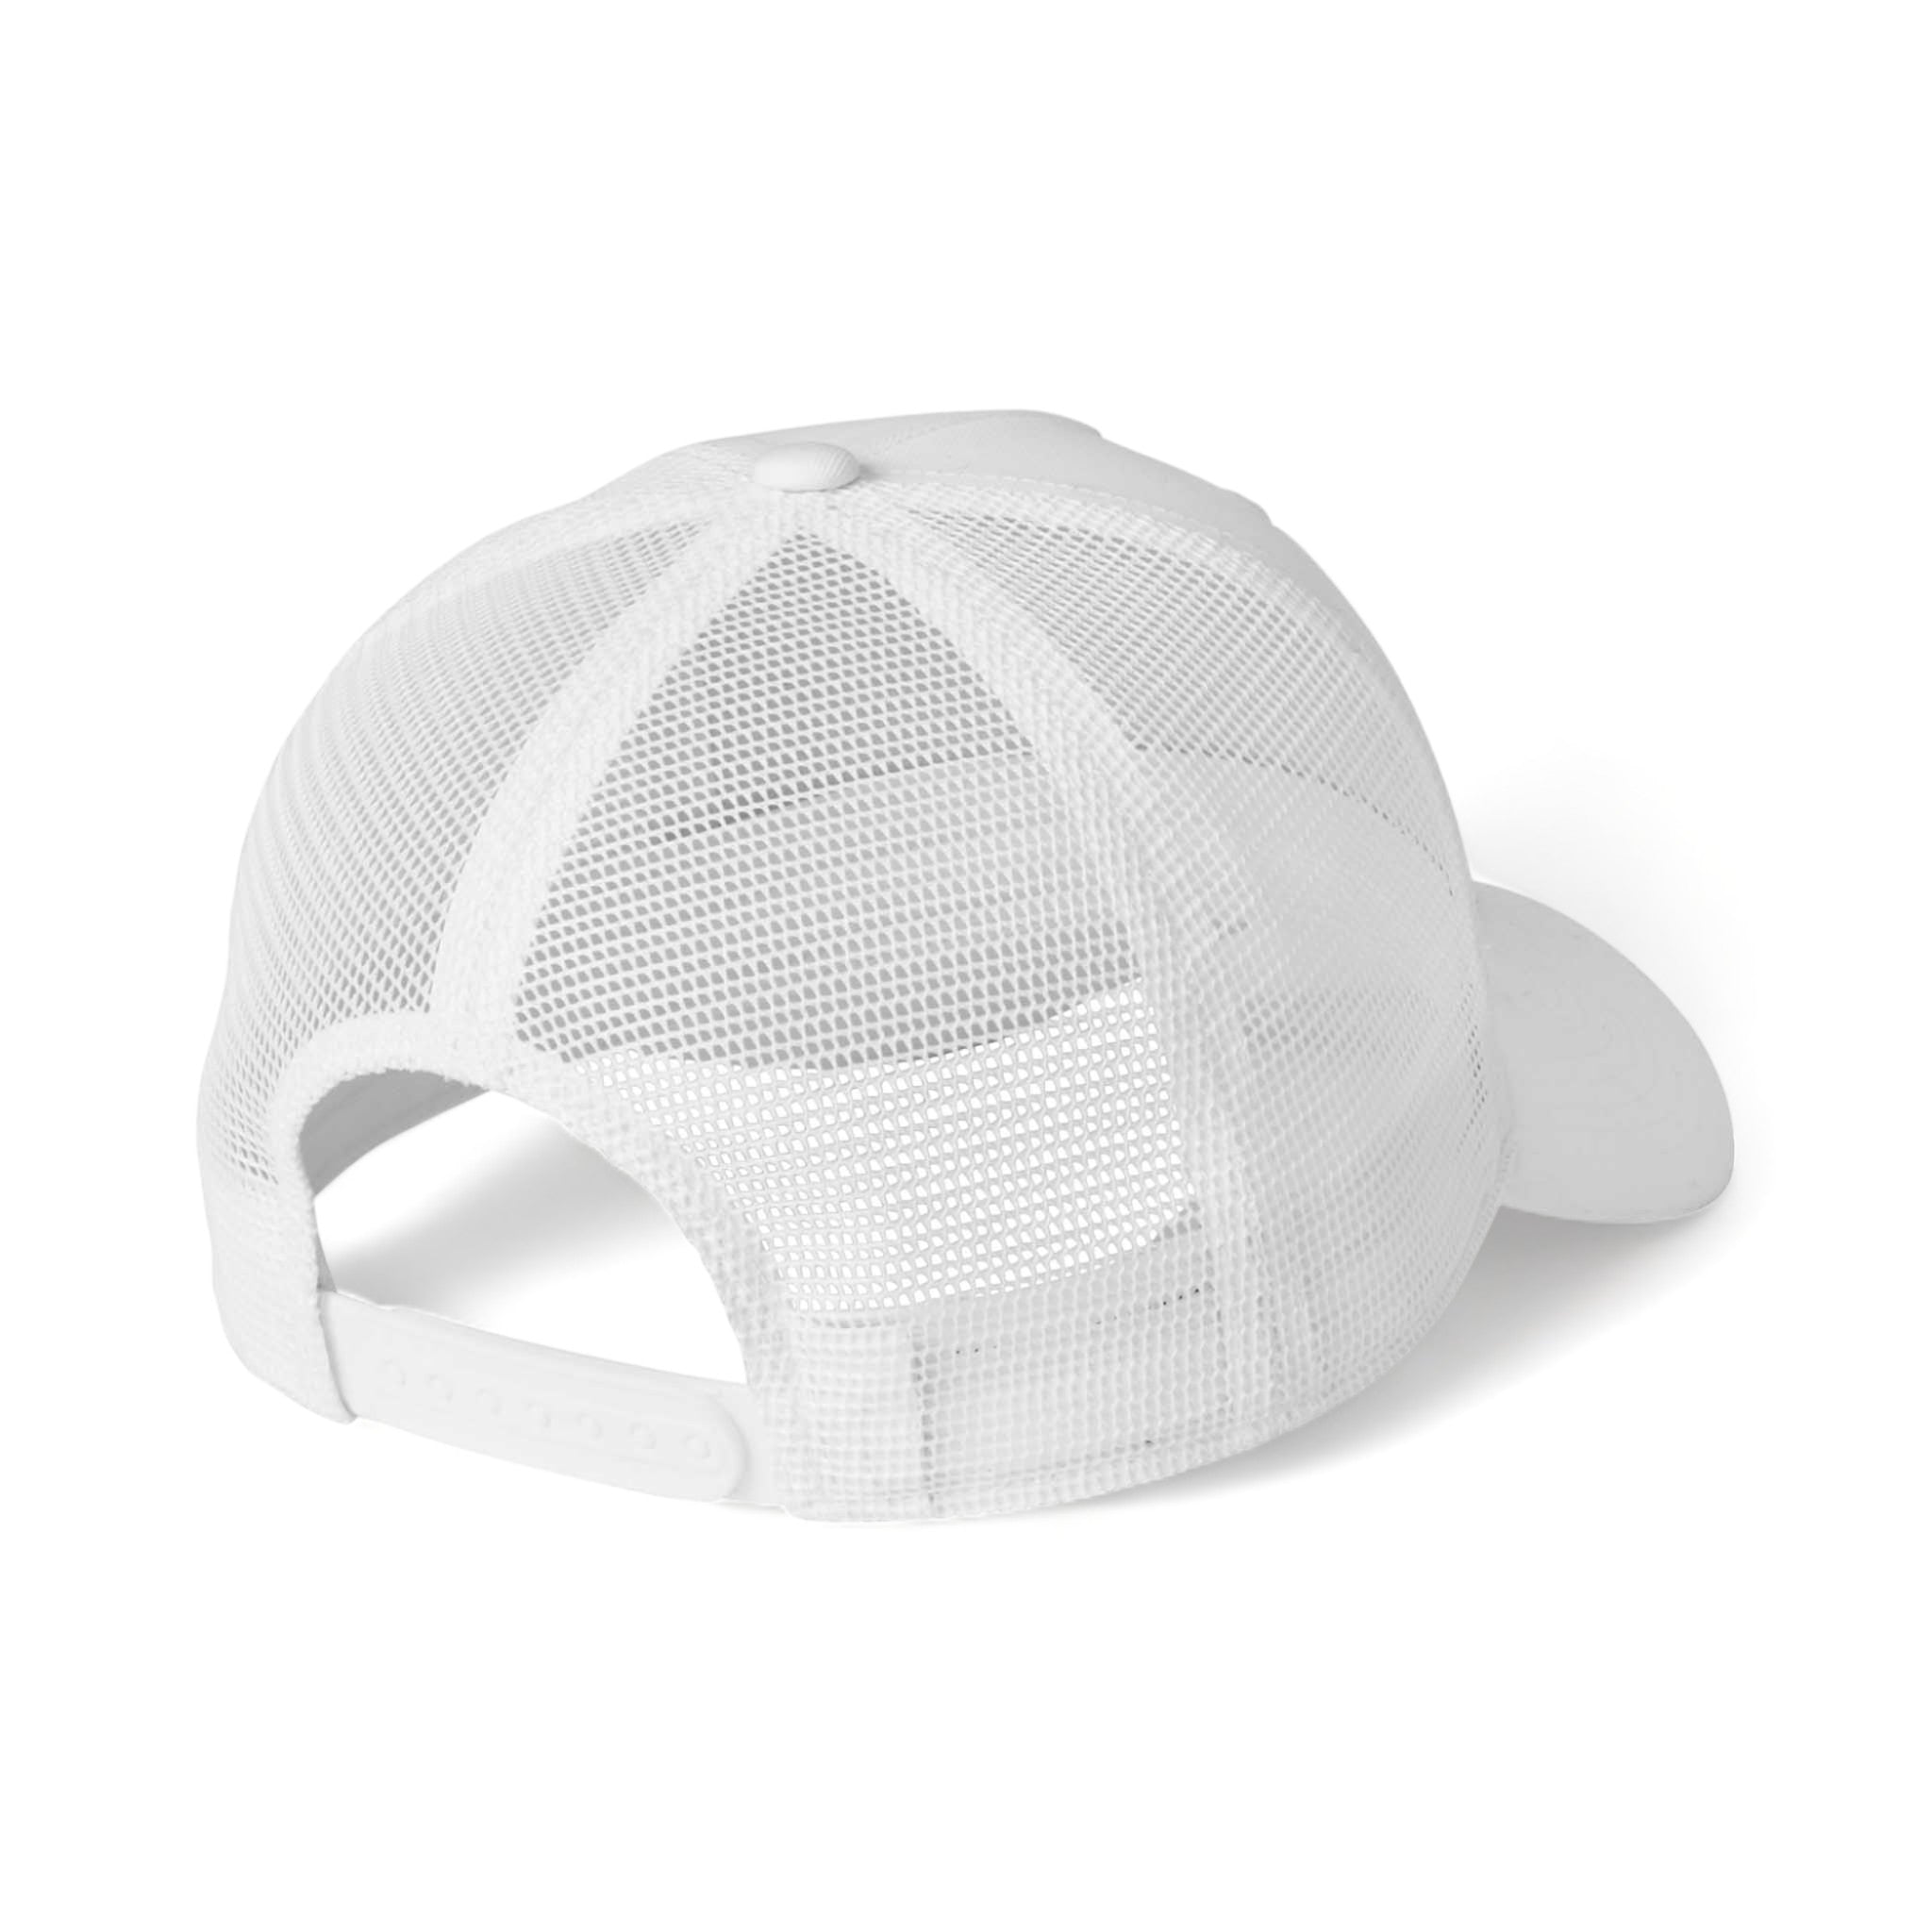 Back view of Nike NKFN9893 custom hat in white and white